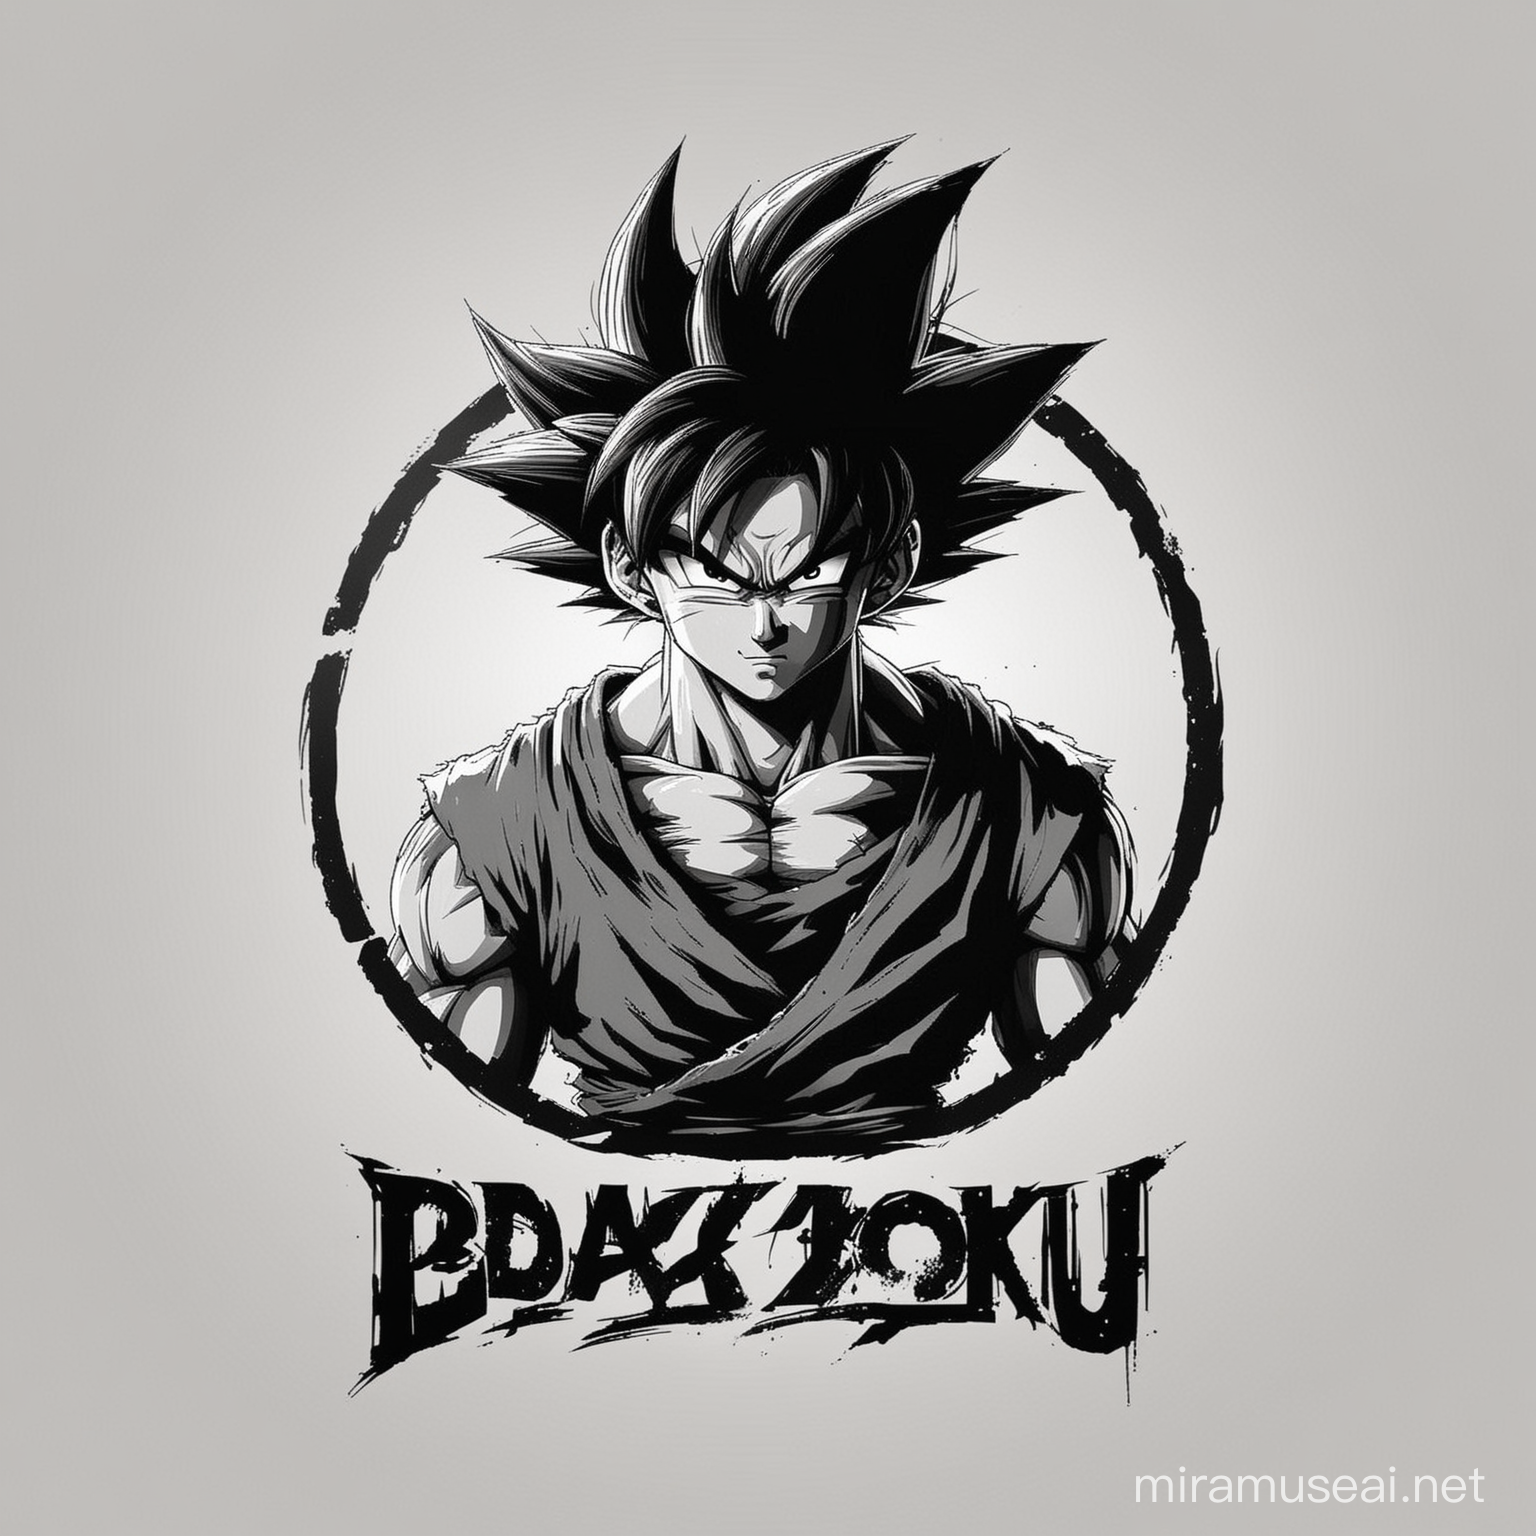 White background, black goku, logo